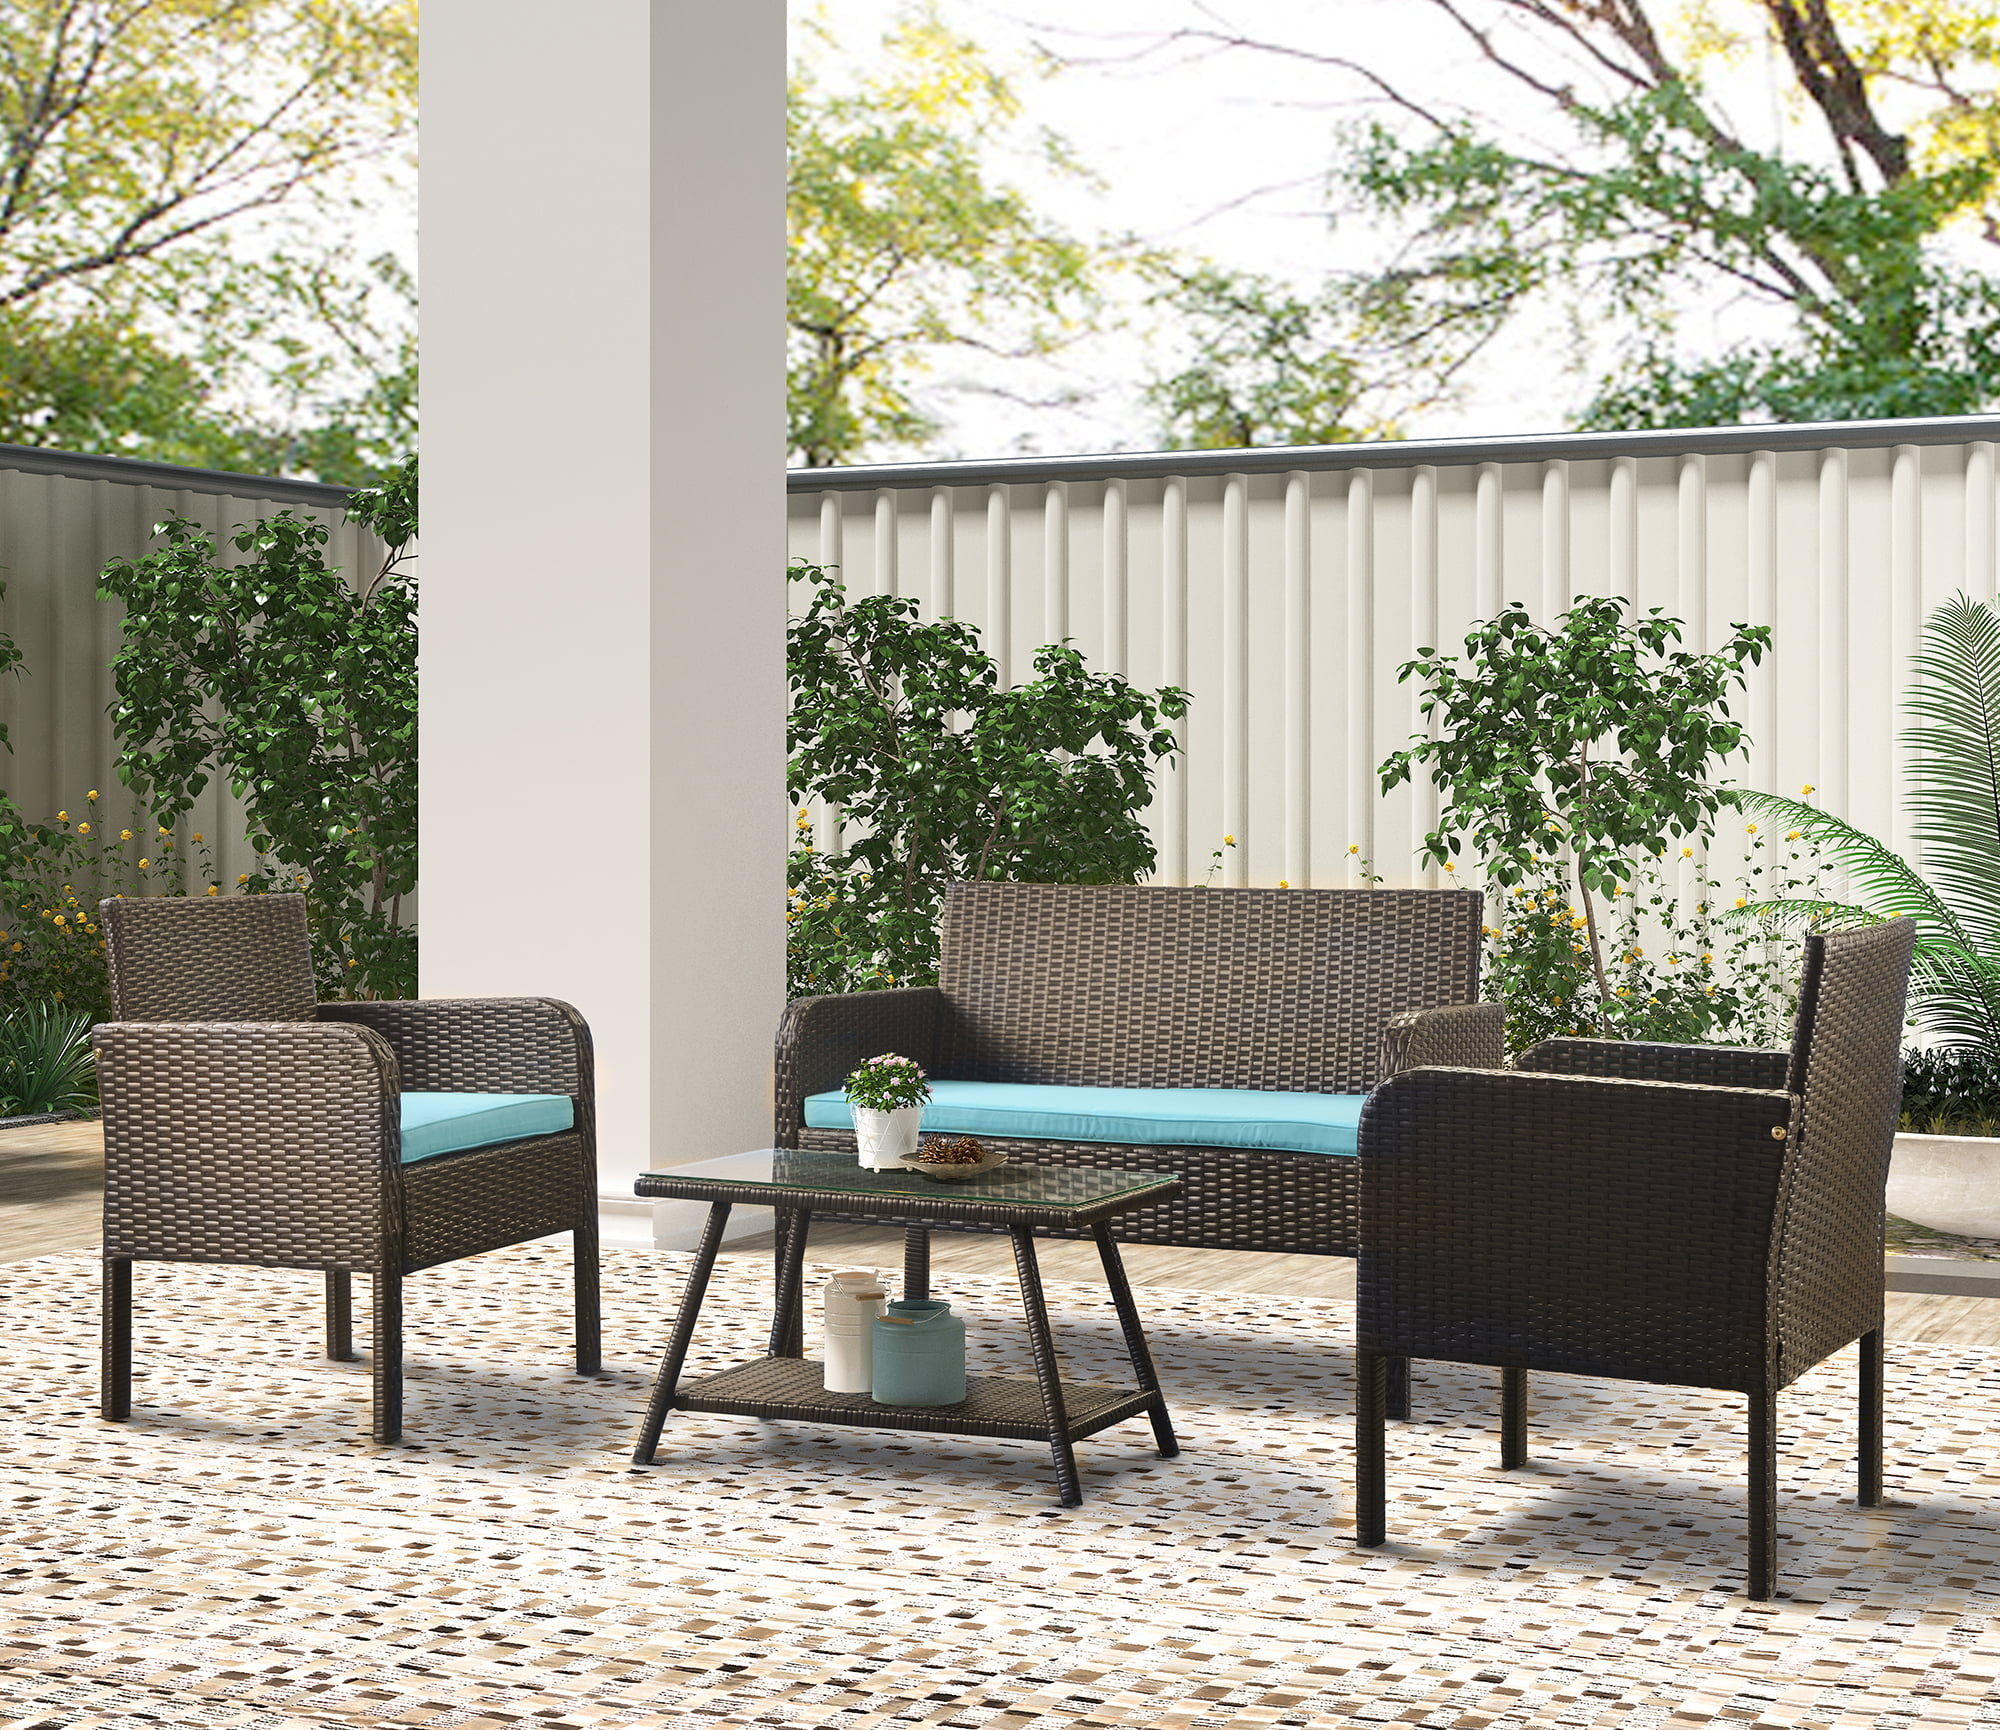 4 PCS Outdoor Garden Patio Furniture Set Cushion Rattan Wicker Chair Bistro Set 